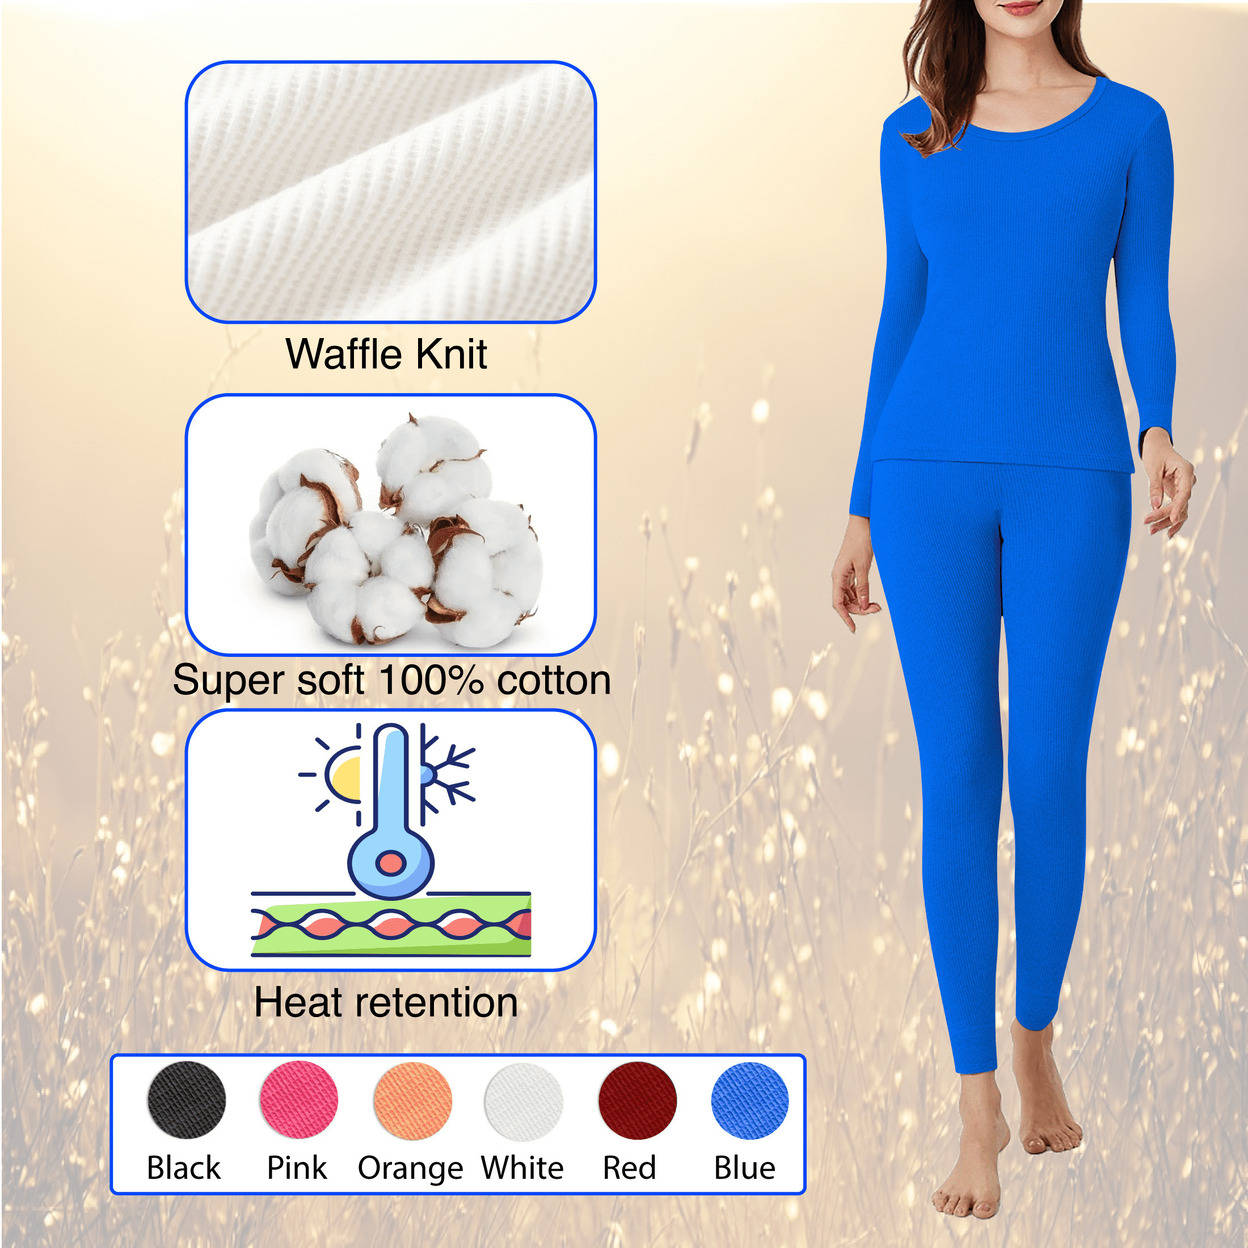 2-Piece: Women's Ultra Soft Cotton Waffle Knit Thermal Sets - White, Small